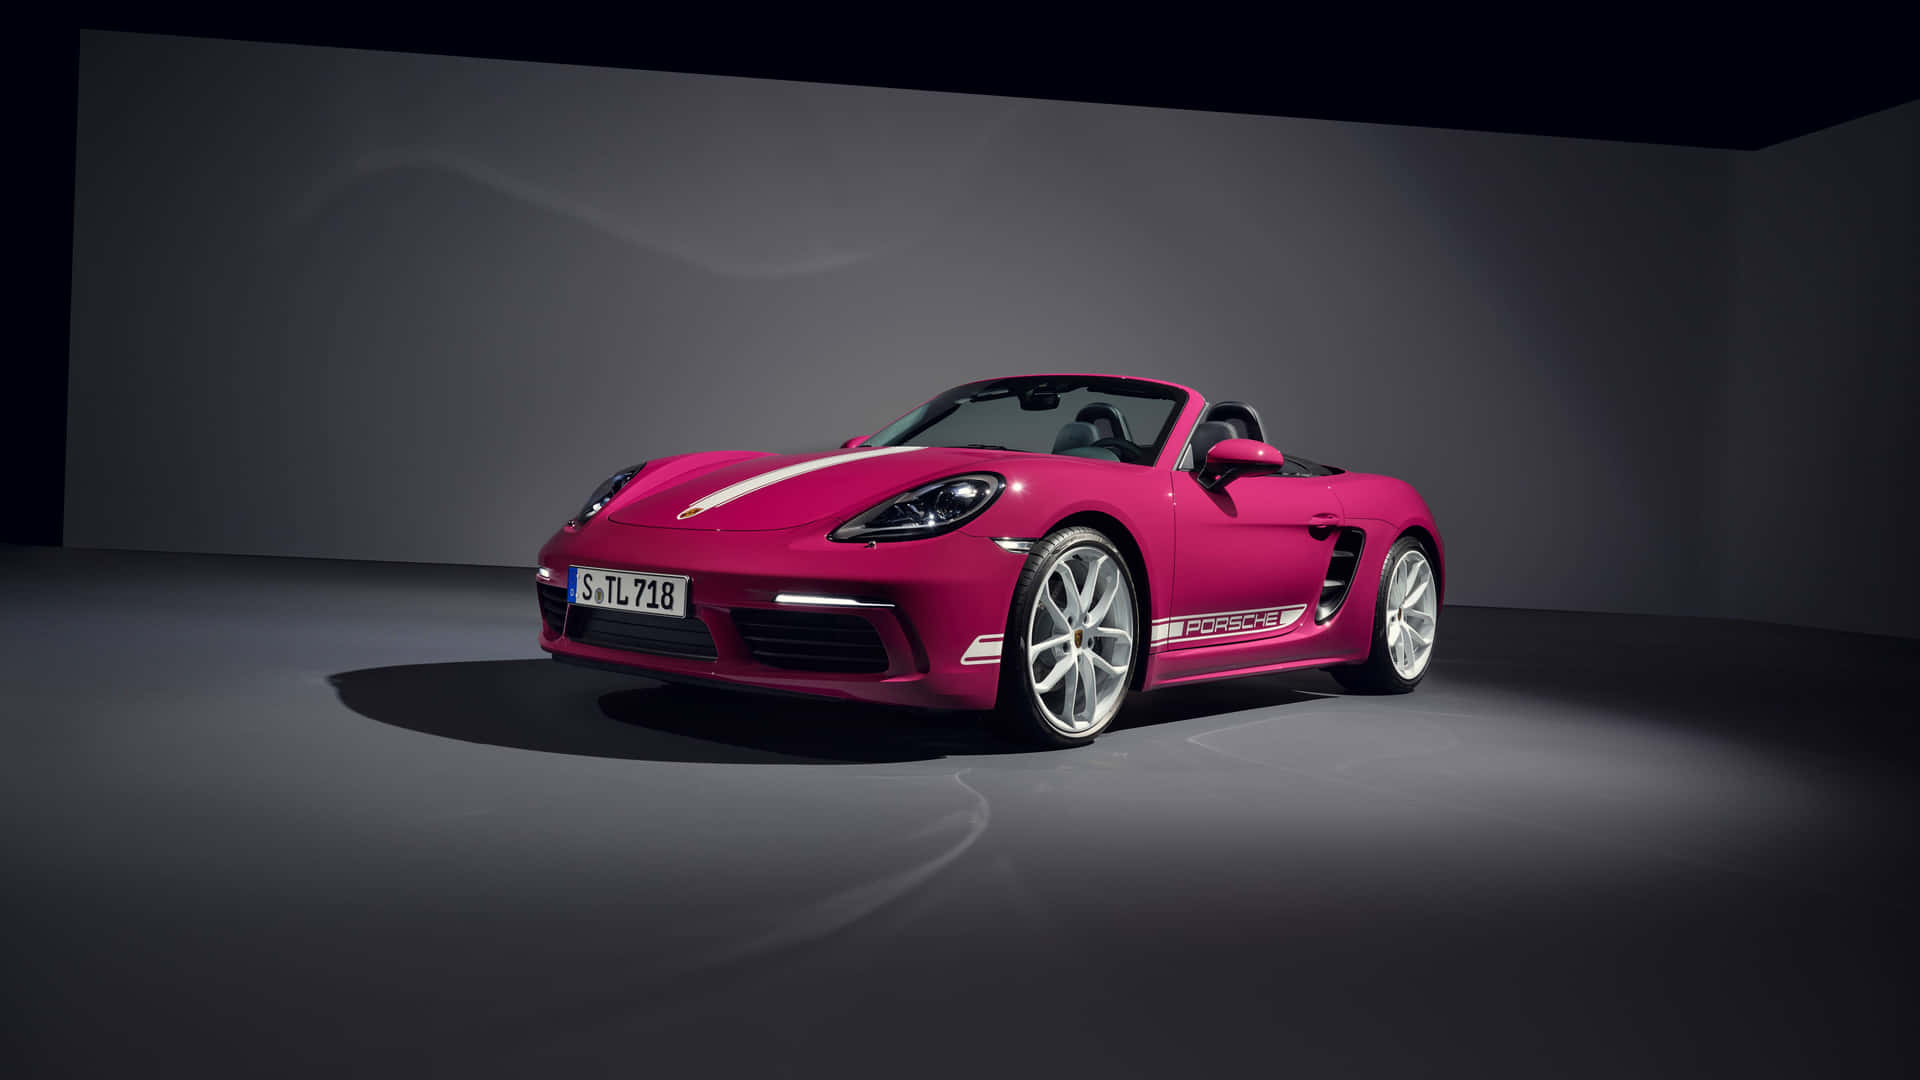 Porsche Boxster - Pink Sports Car In A Dark Room Wallpaper